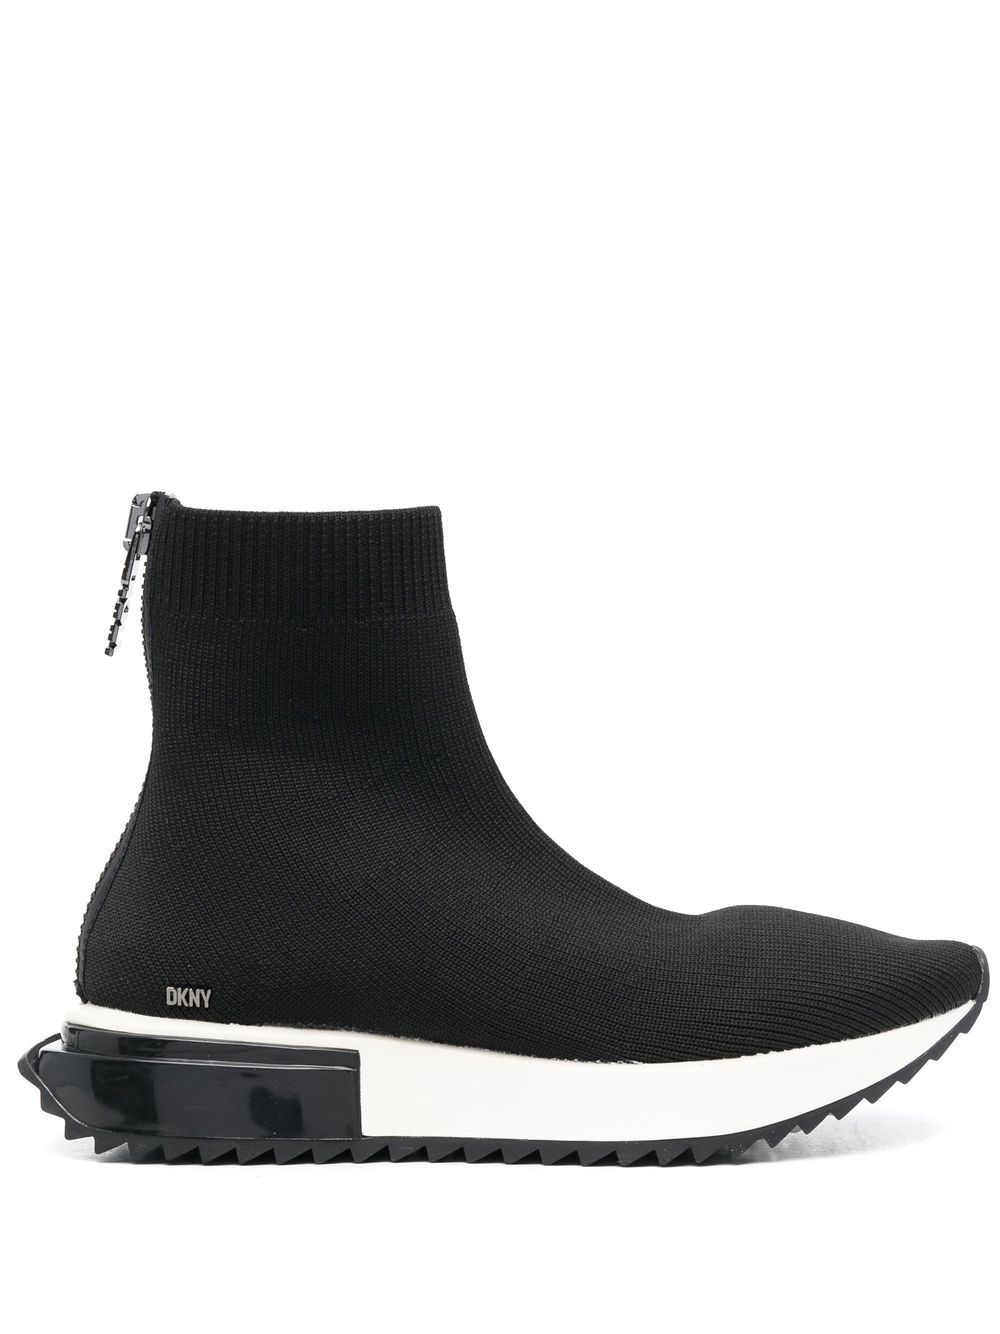 DKNY Promila sock-style sneakers - Black von DKNY